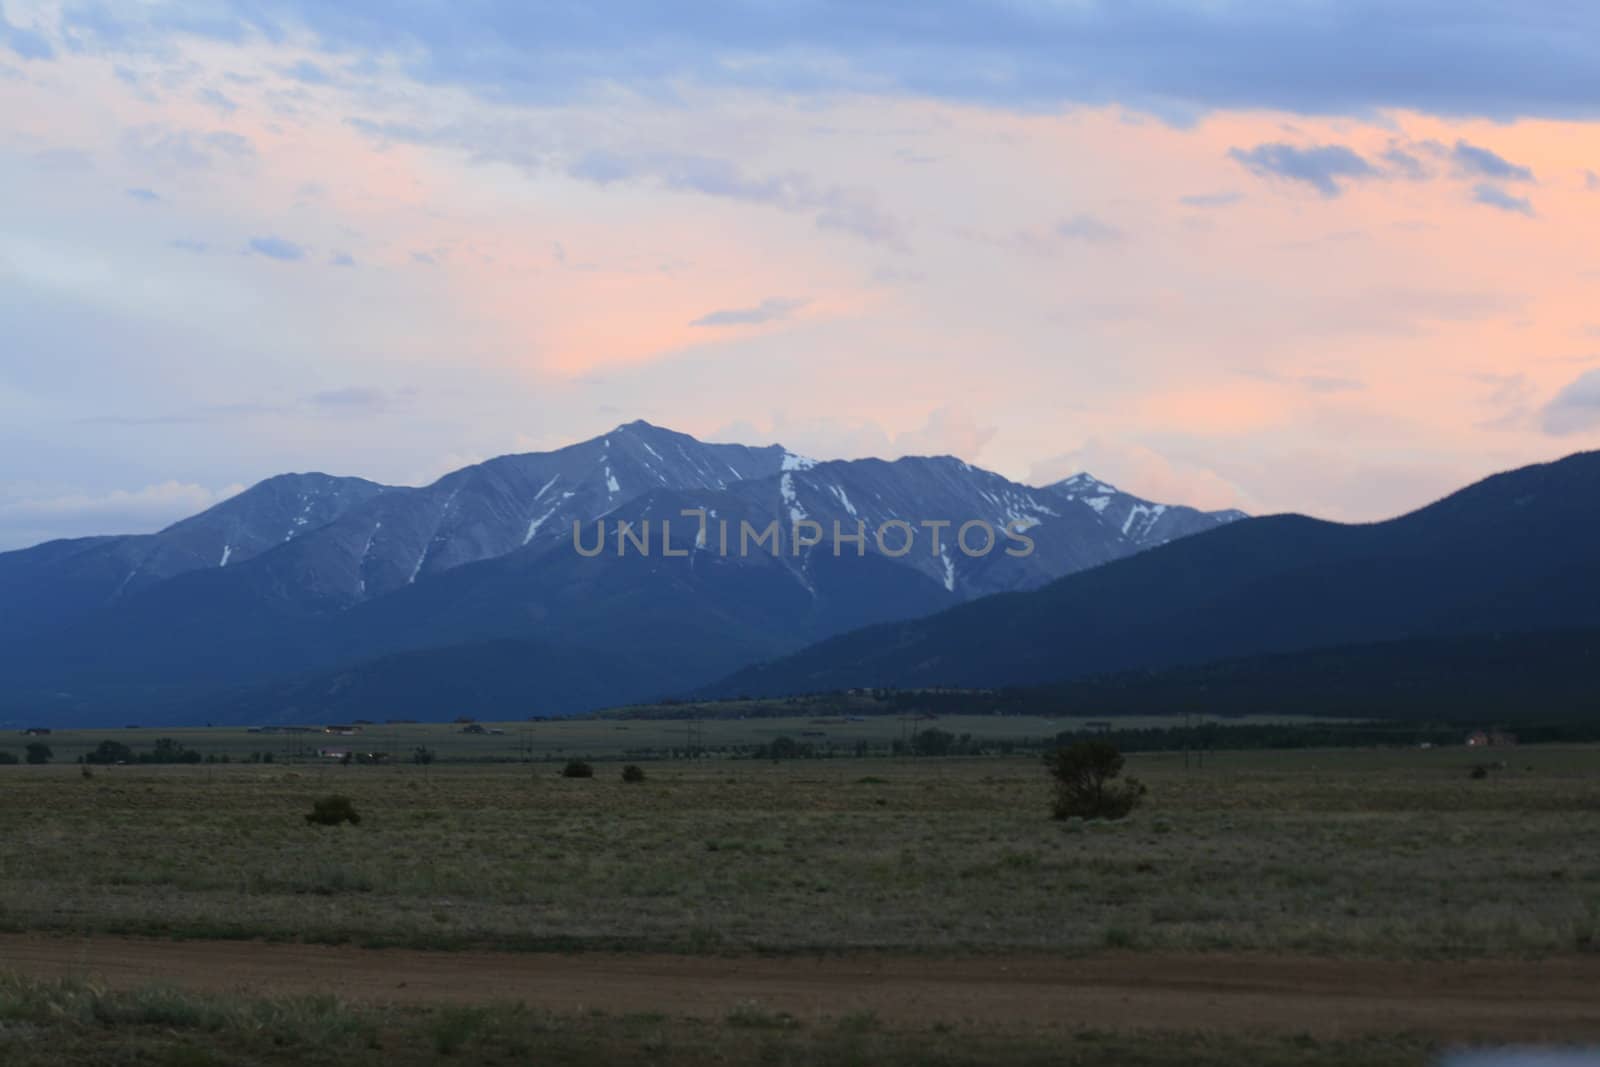 Colorado Mountains by JrnGeeraert